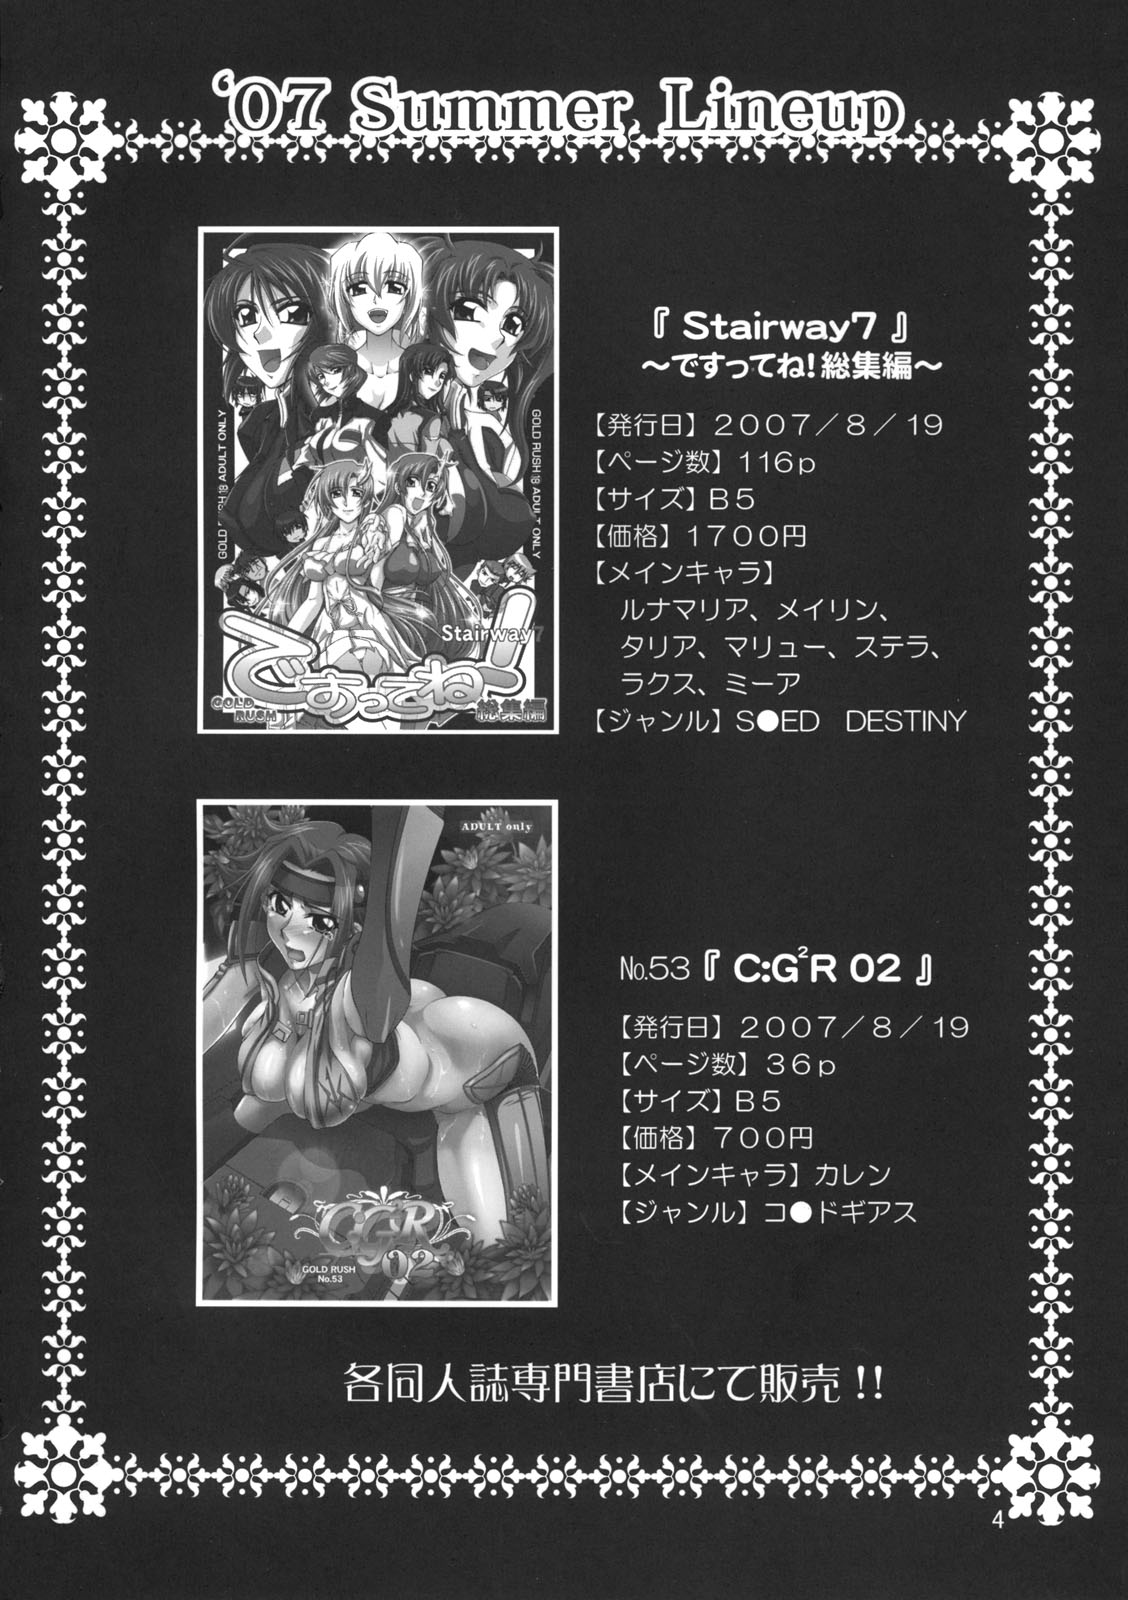 (C72) [GOLD RUSH (鈴木あどれす)] A Diva of Healing II (機動戦士ガンダムSEED DESTINY)